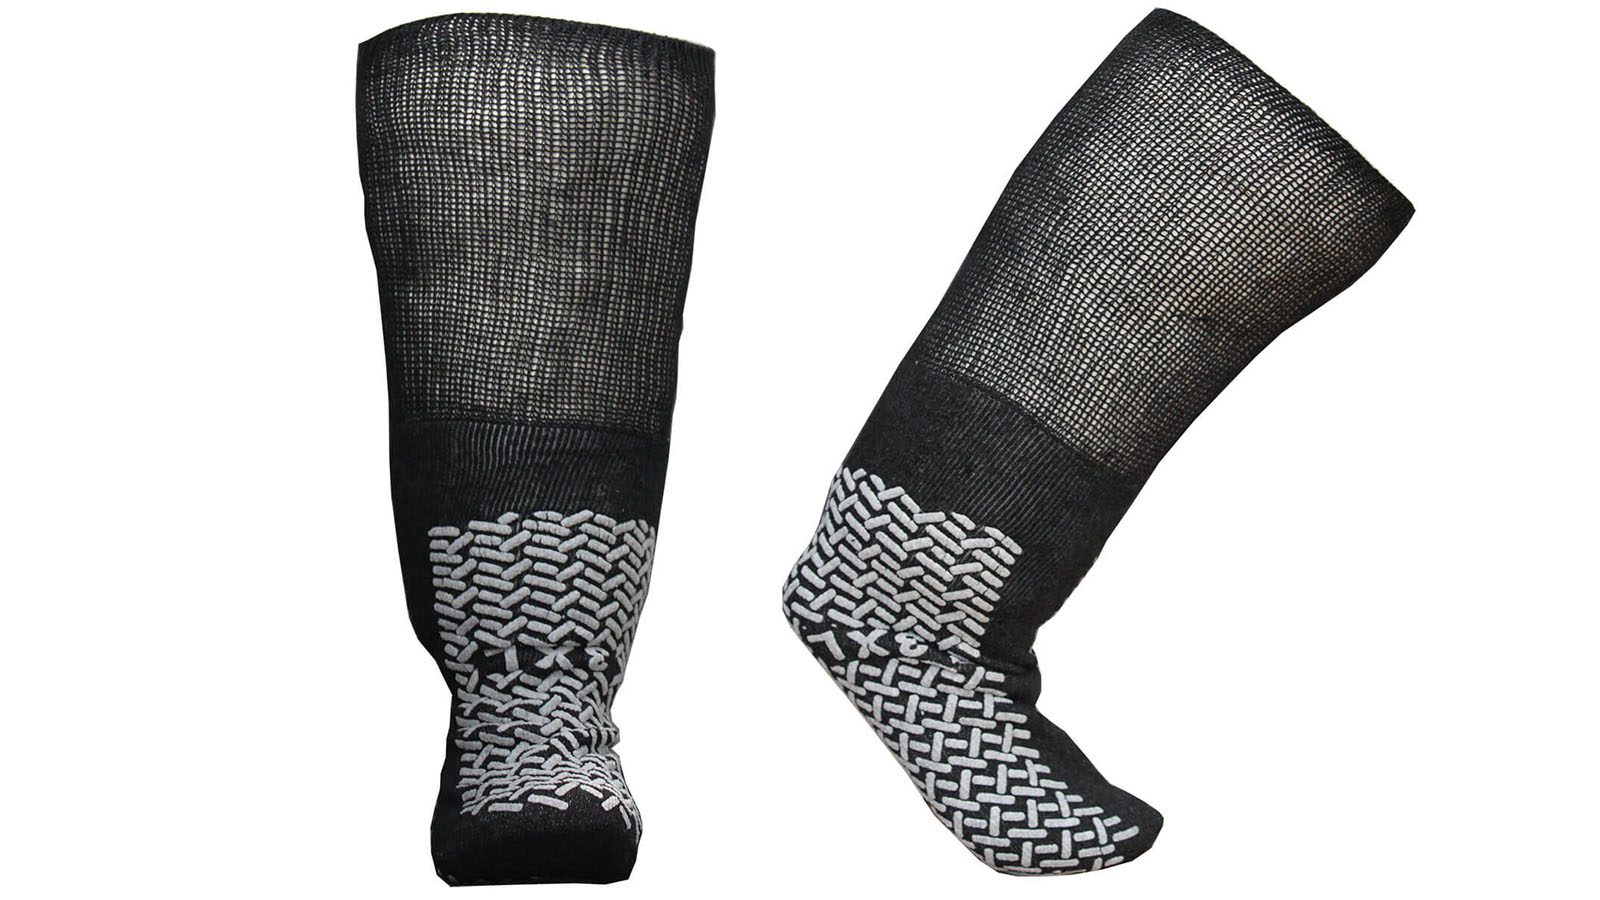 Bariatric socks